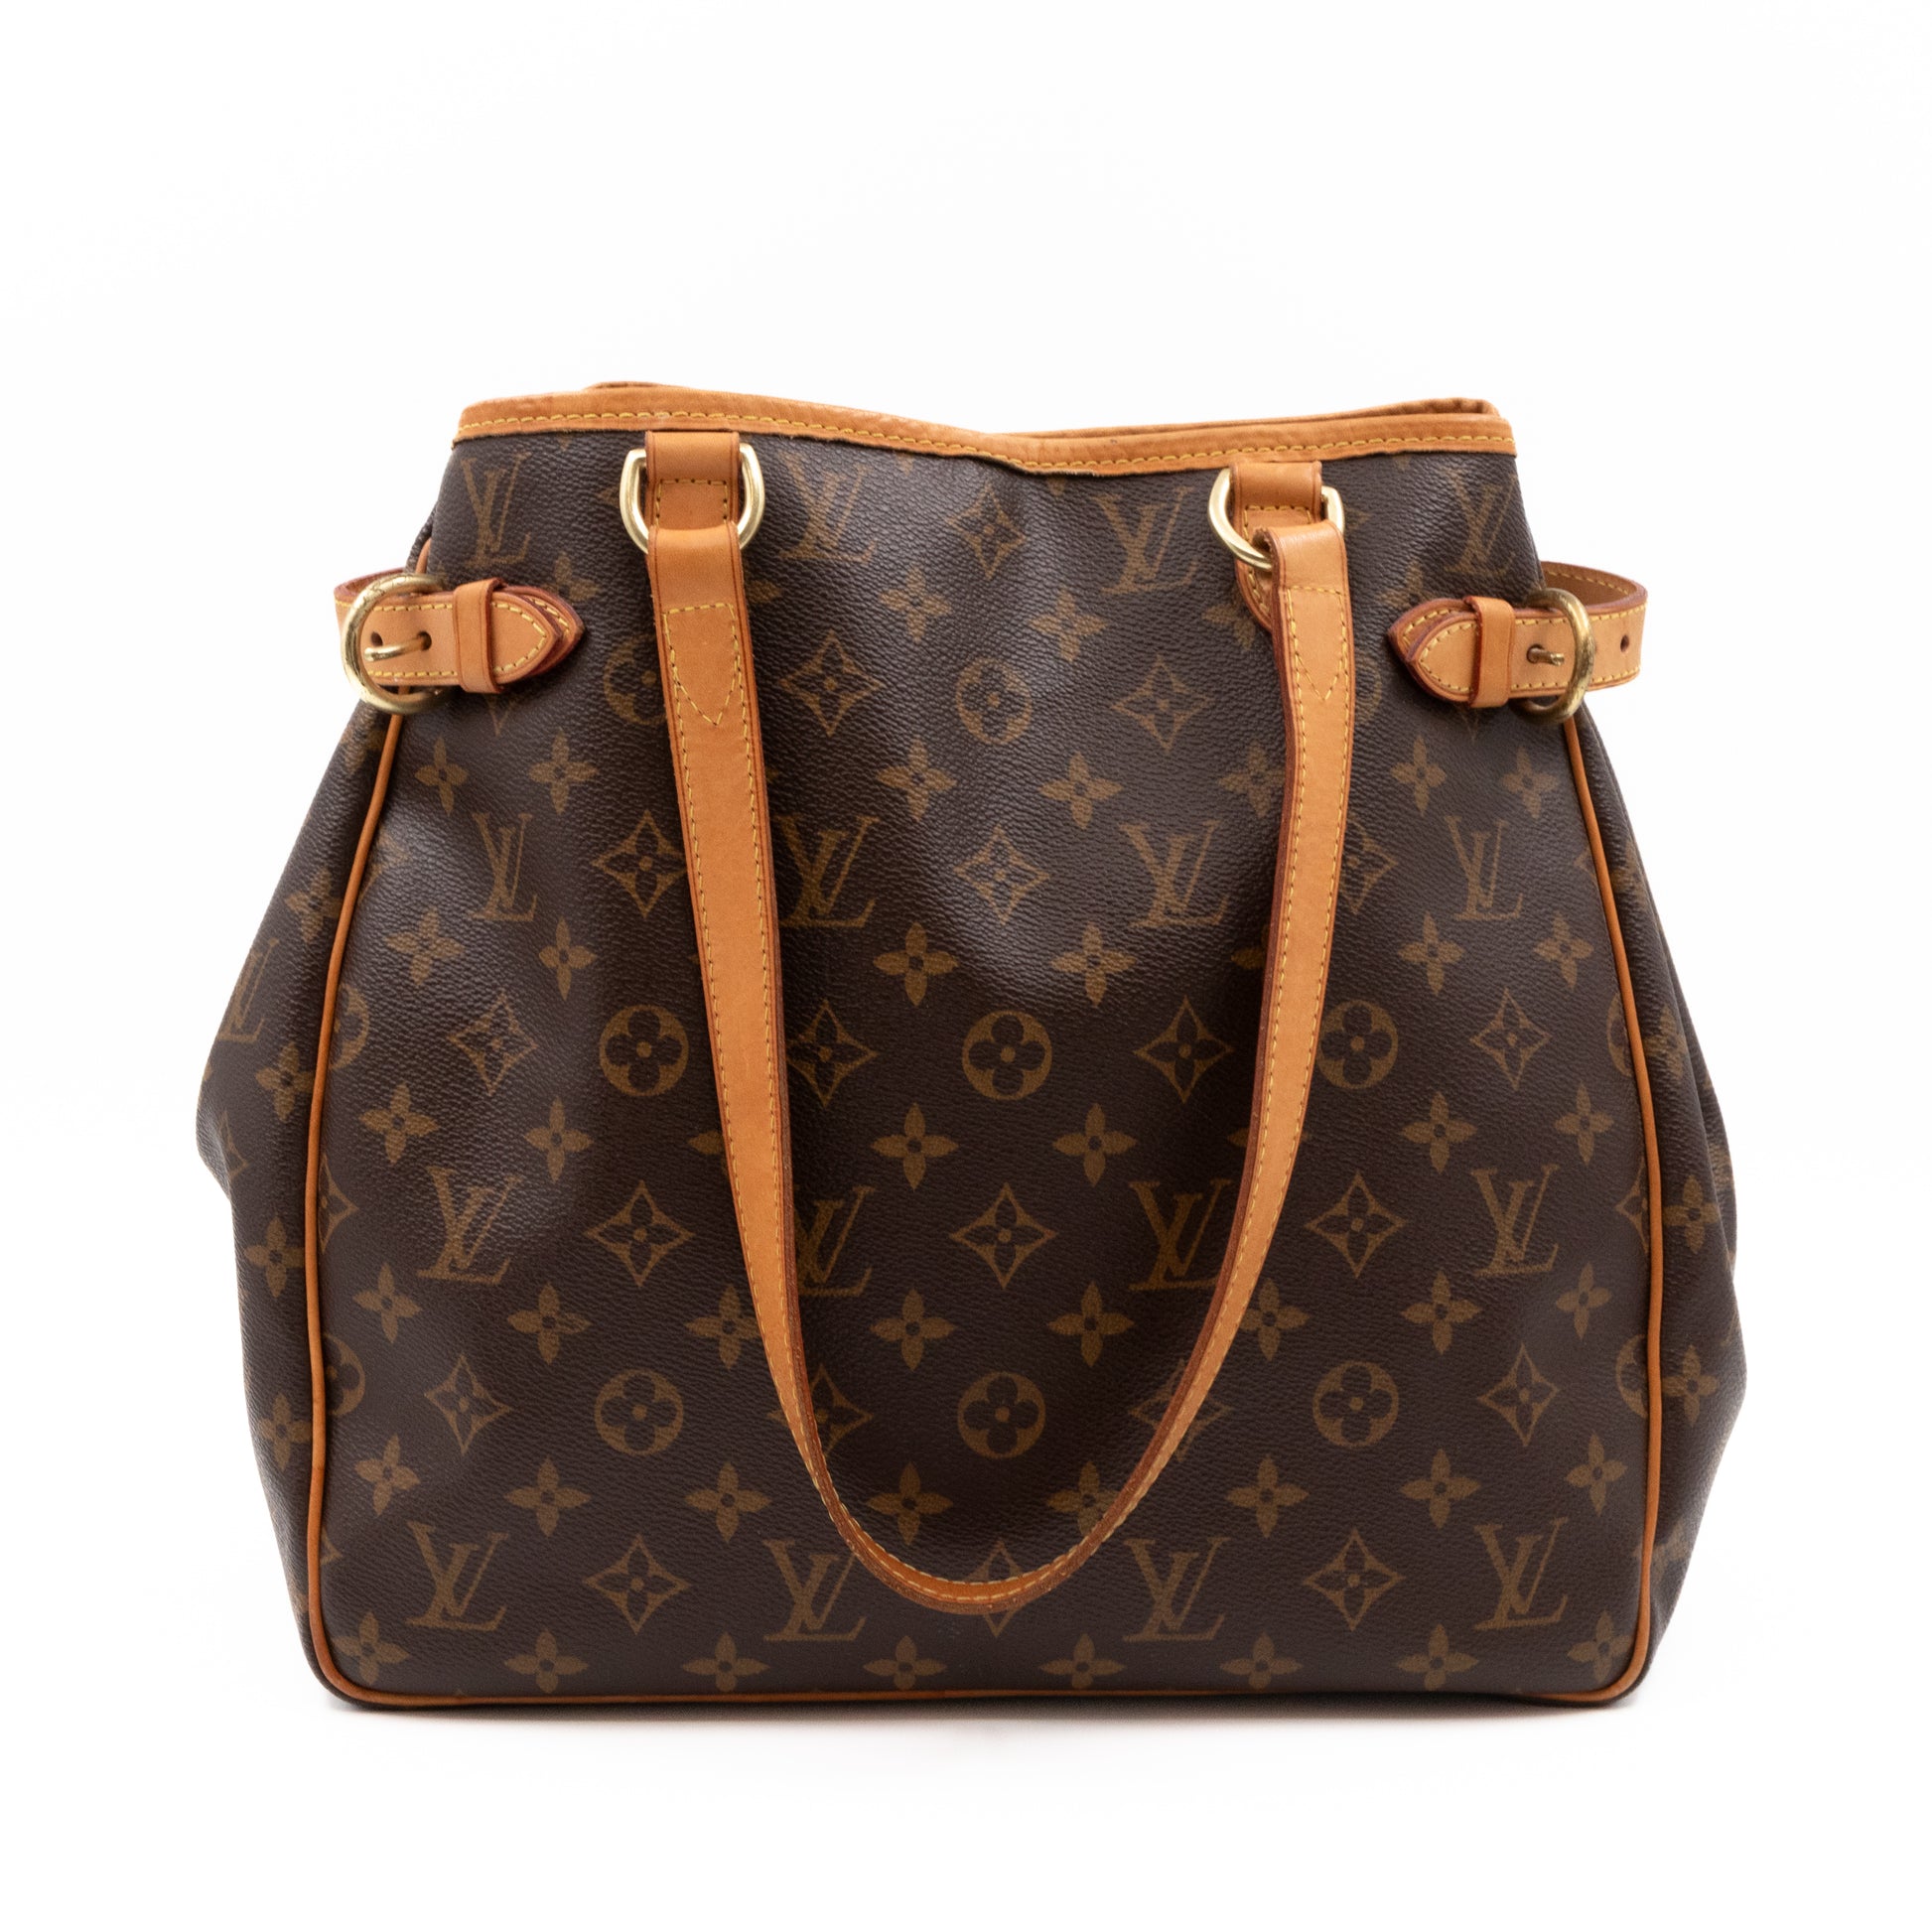 Shop for Louis Vuitton Monogram Canvas Leather Batignolles Vertical Bag -  Shipped from USA